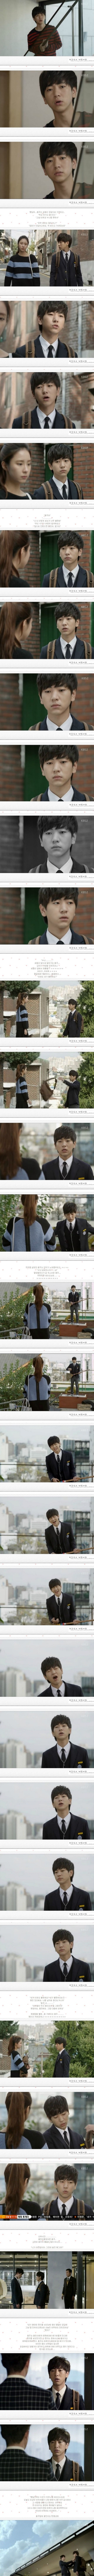 episode 13 captures for the Korean drama 'Blade Man'